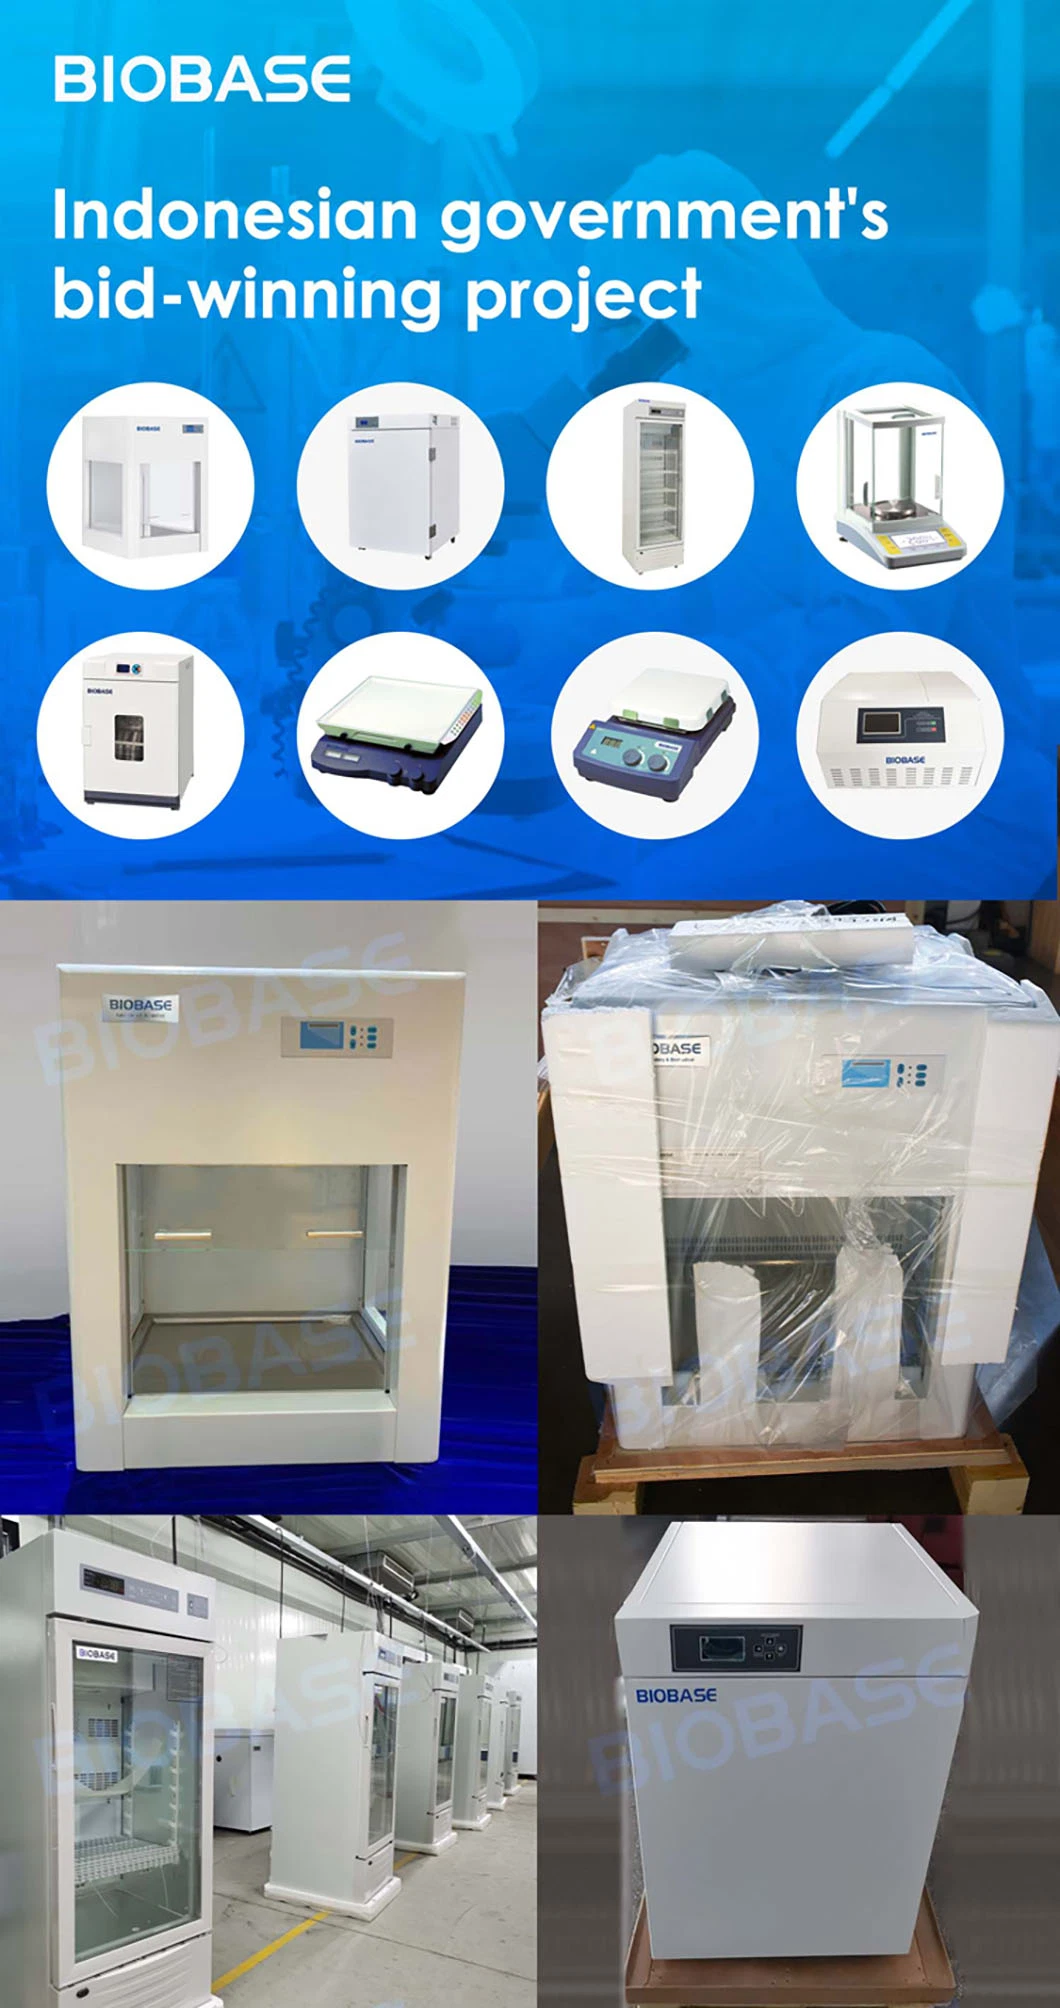 Biobase Portable Car Refrigerator in Stocks